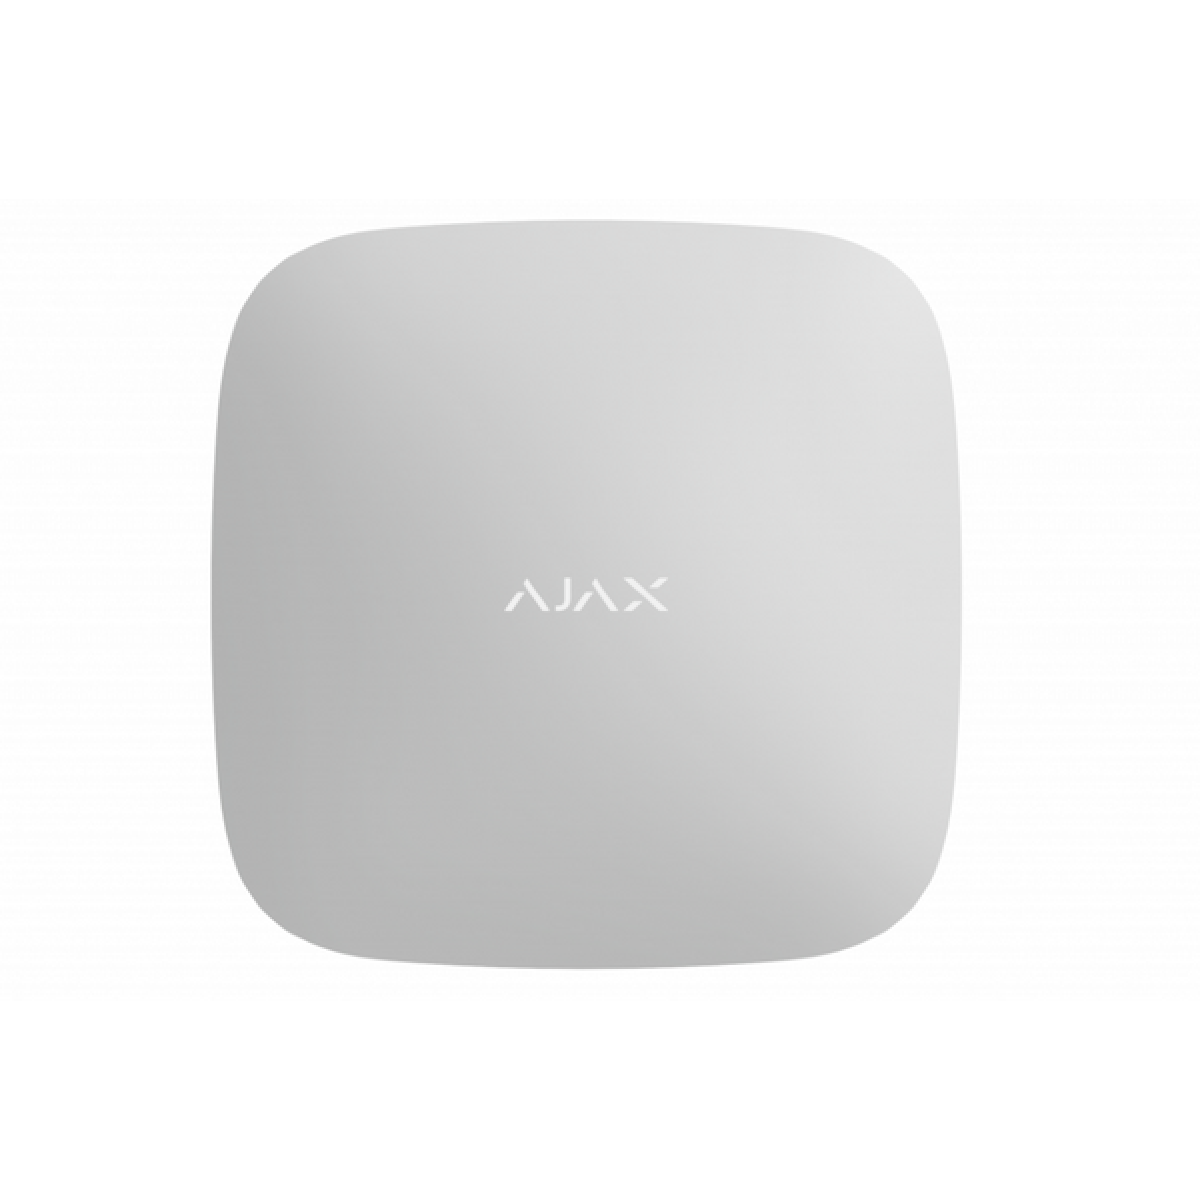 Ajax ReX 2 Radio signal range extender with photo verification support White